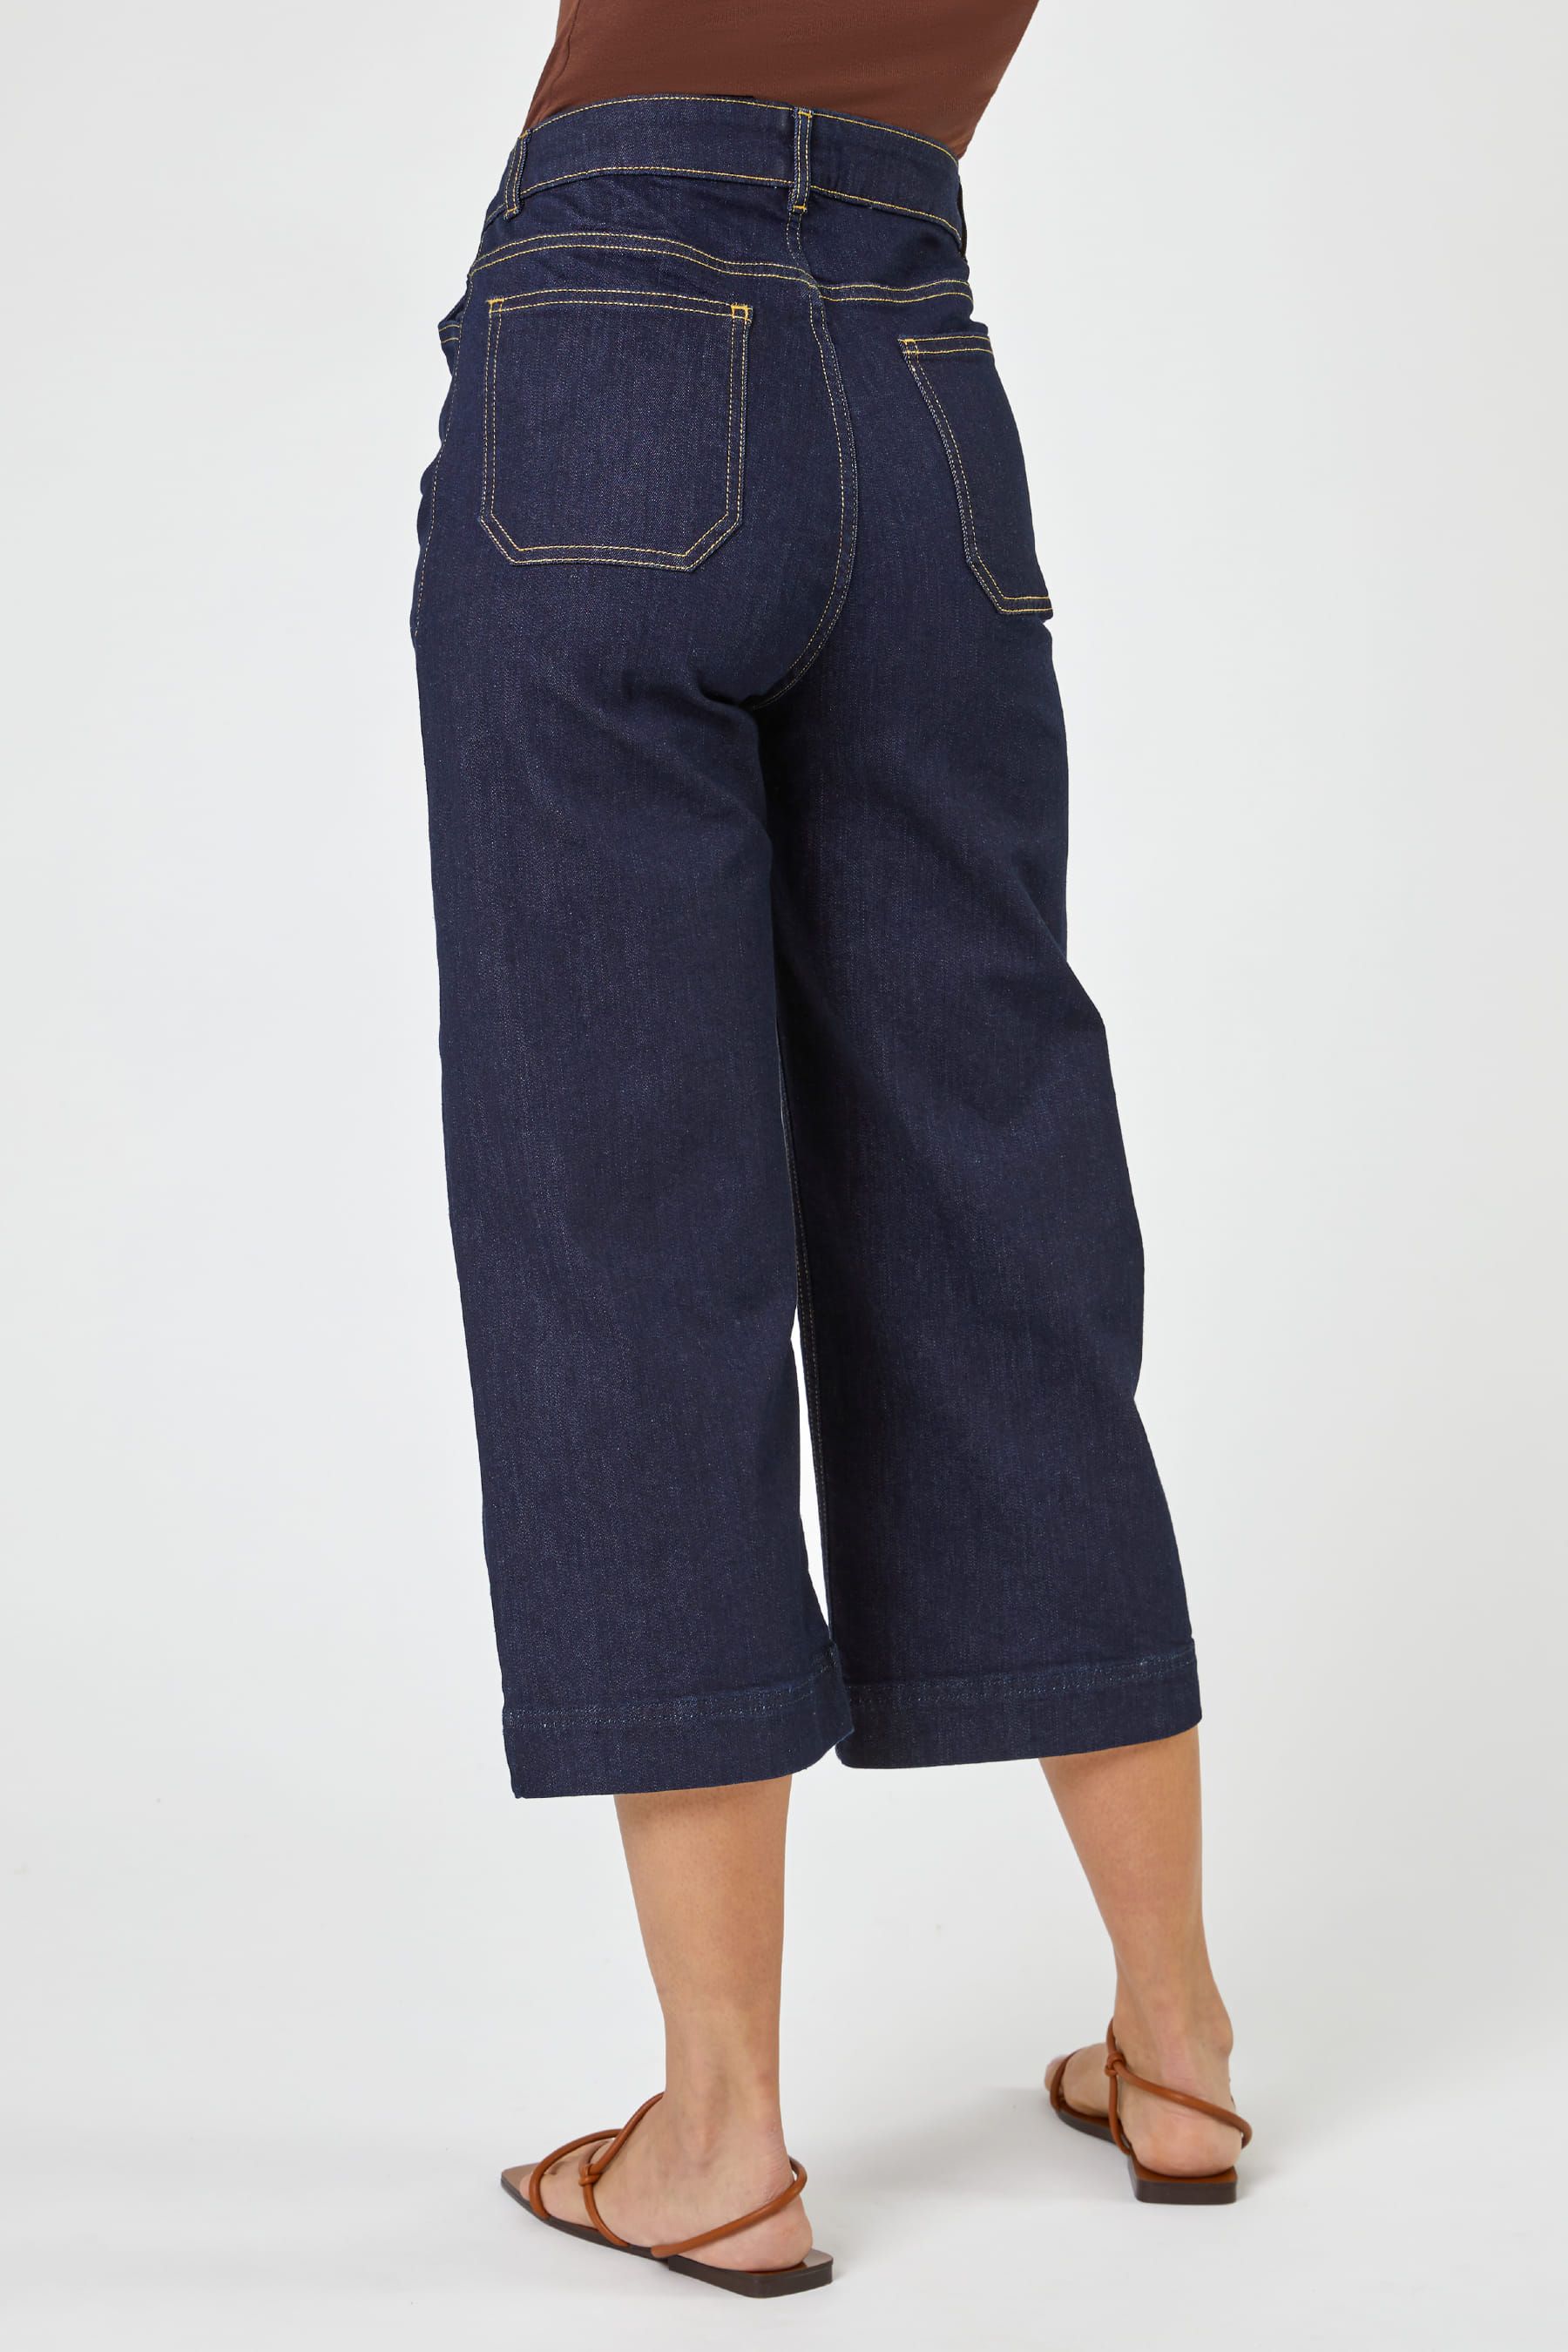 Buy Roman Blue Denim Wide Leg Culottes from the Next UK online shop